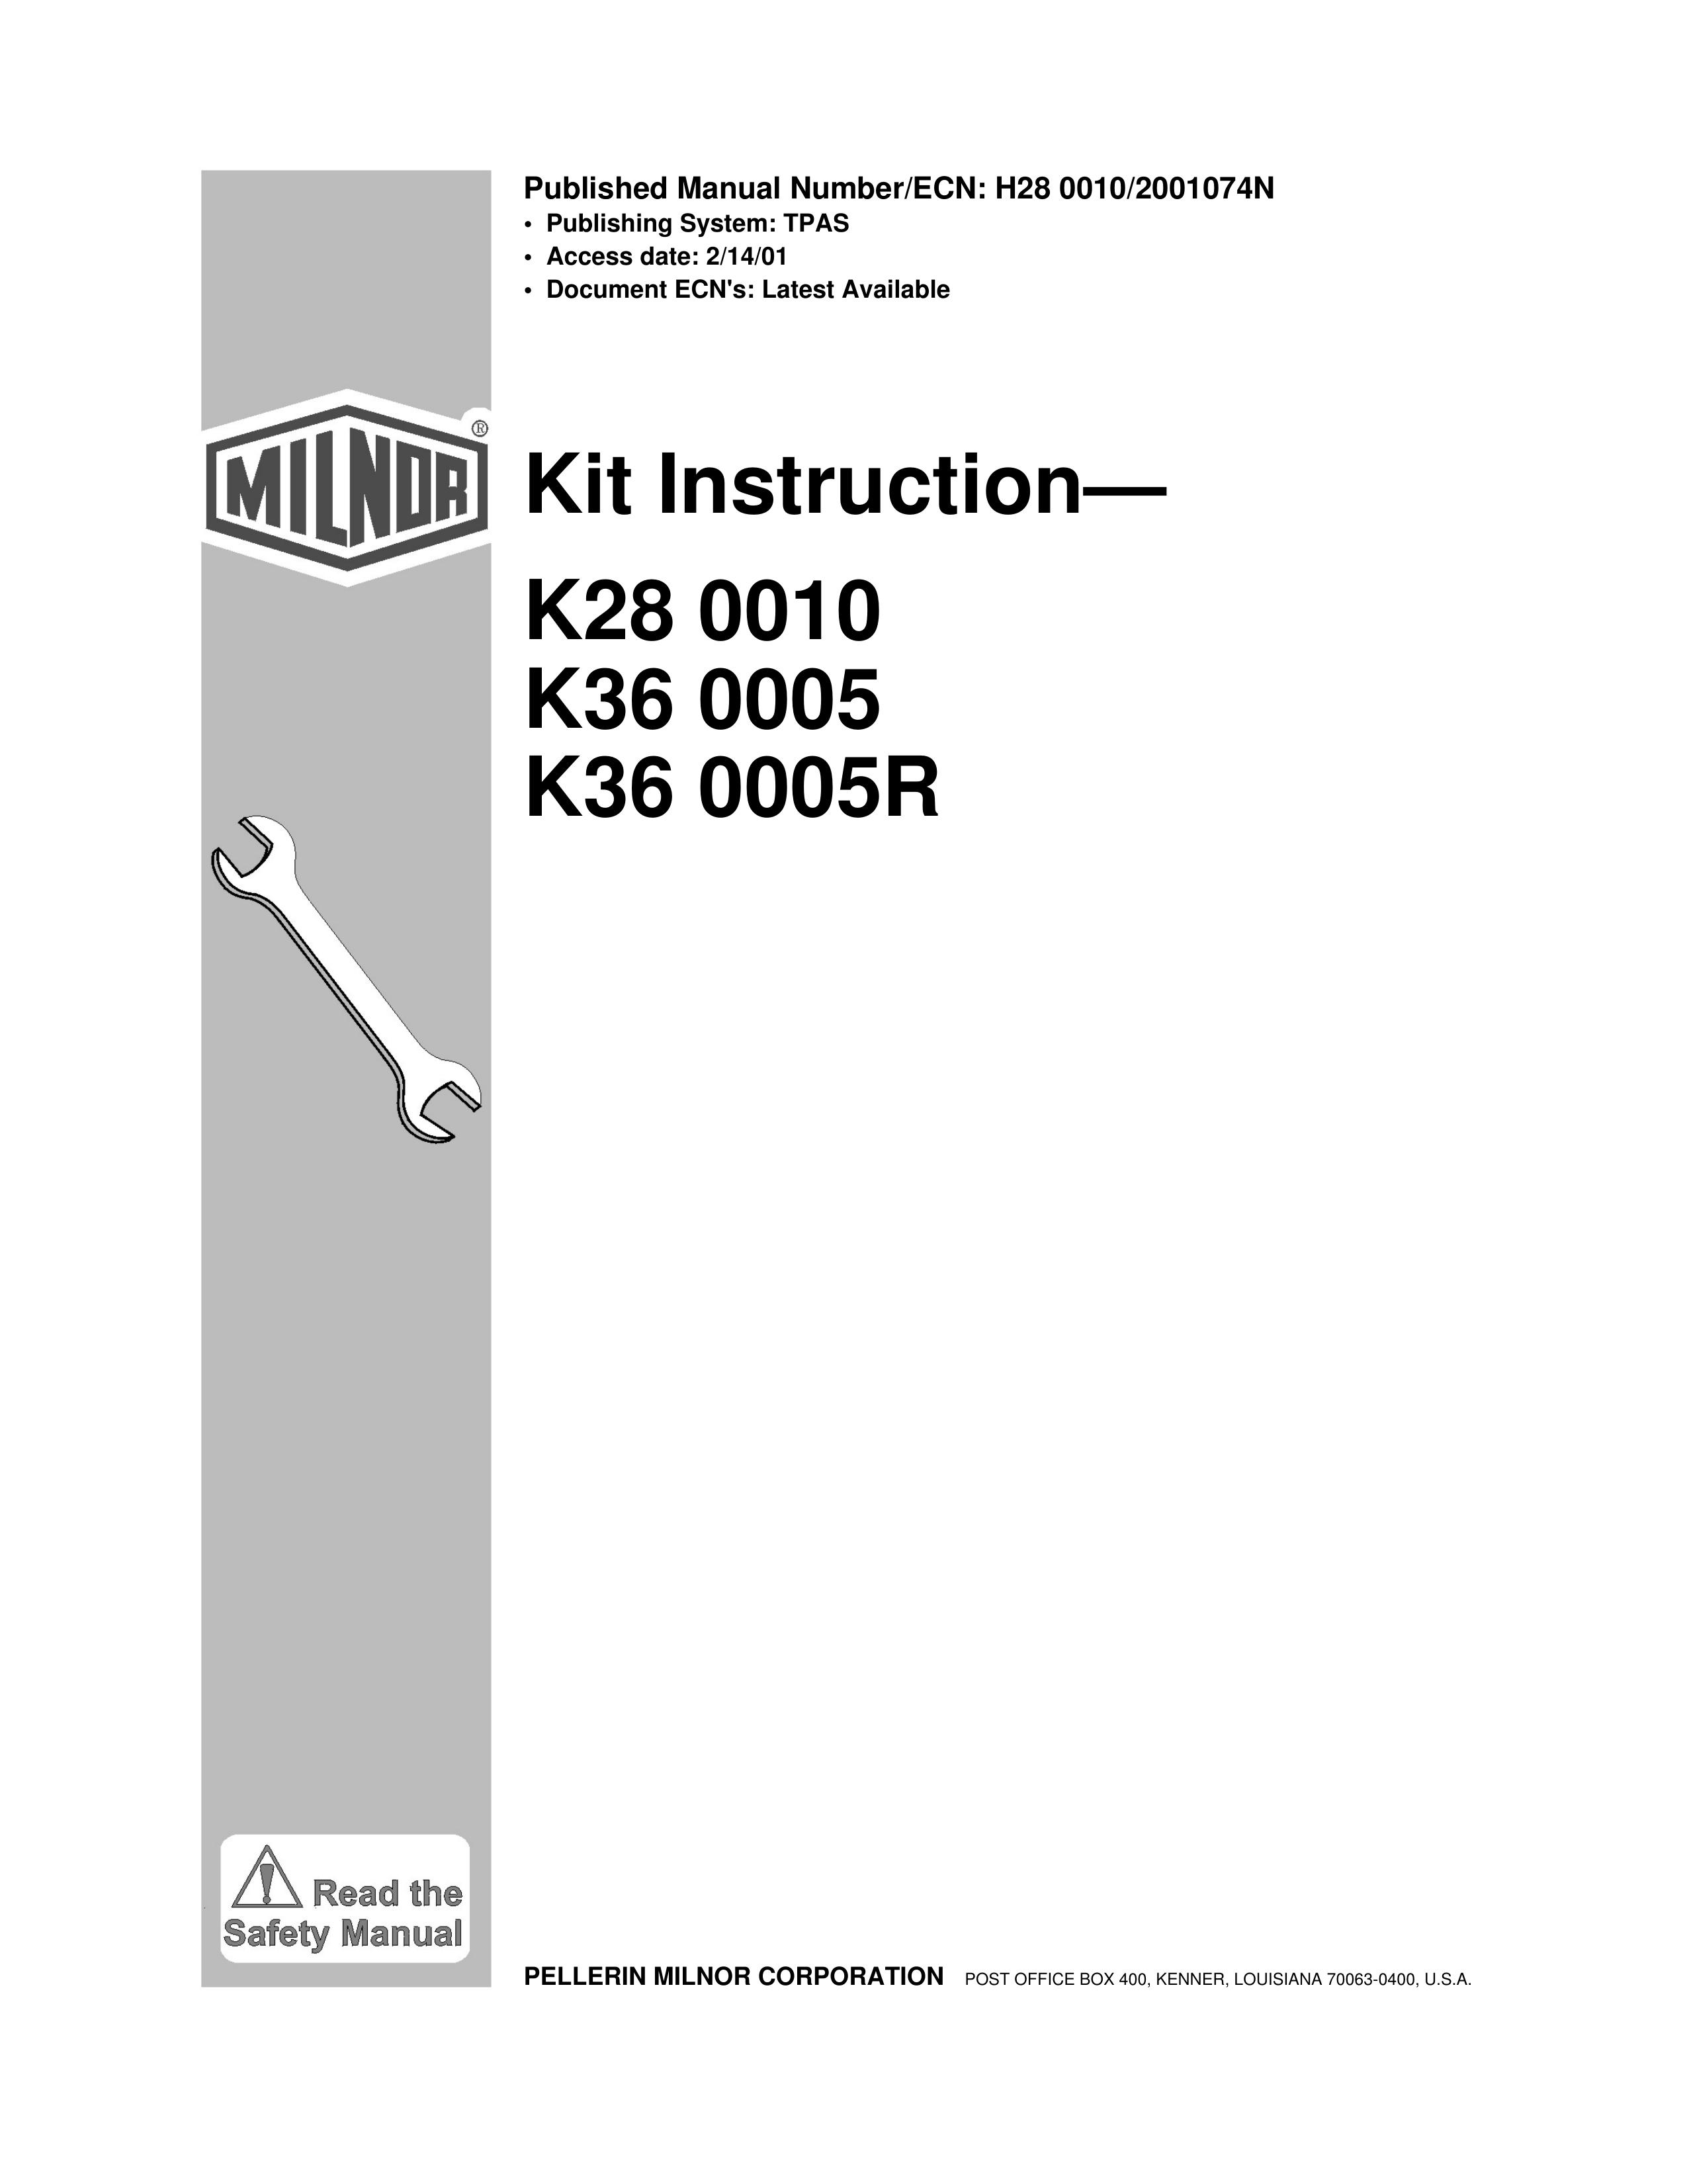 Milnor K36 0005 Washer User Manual